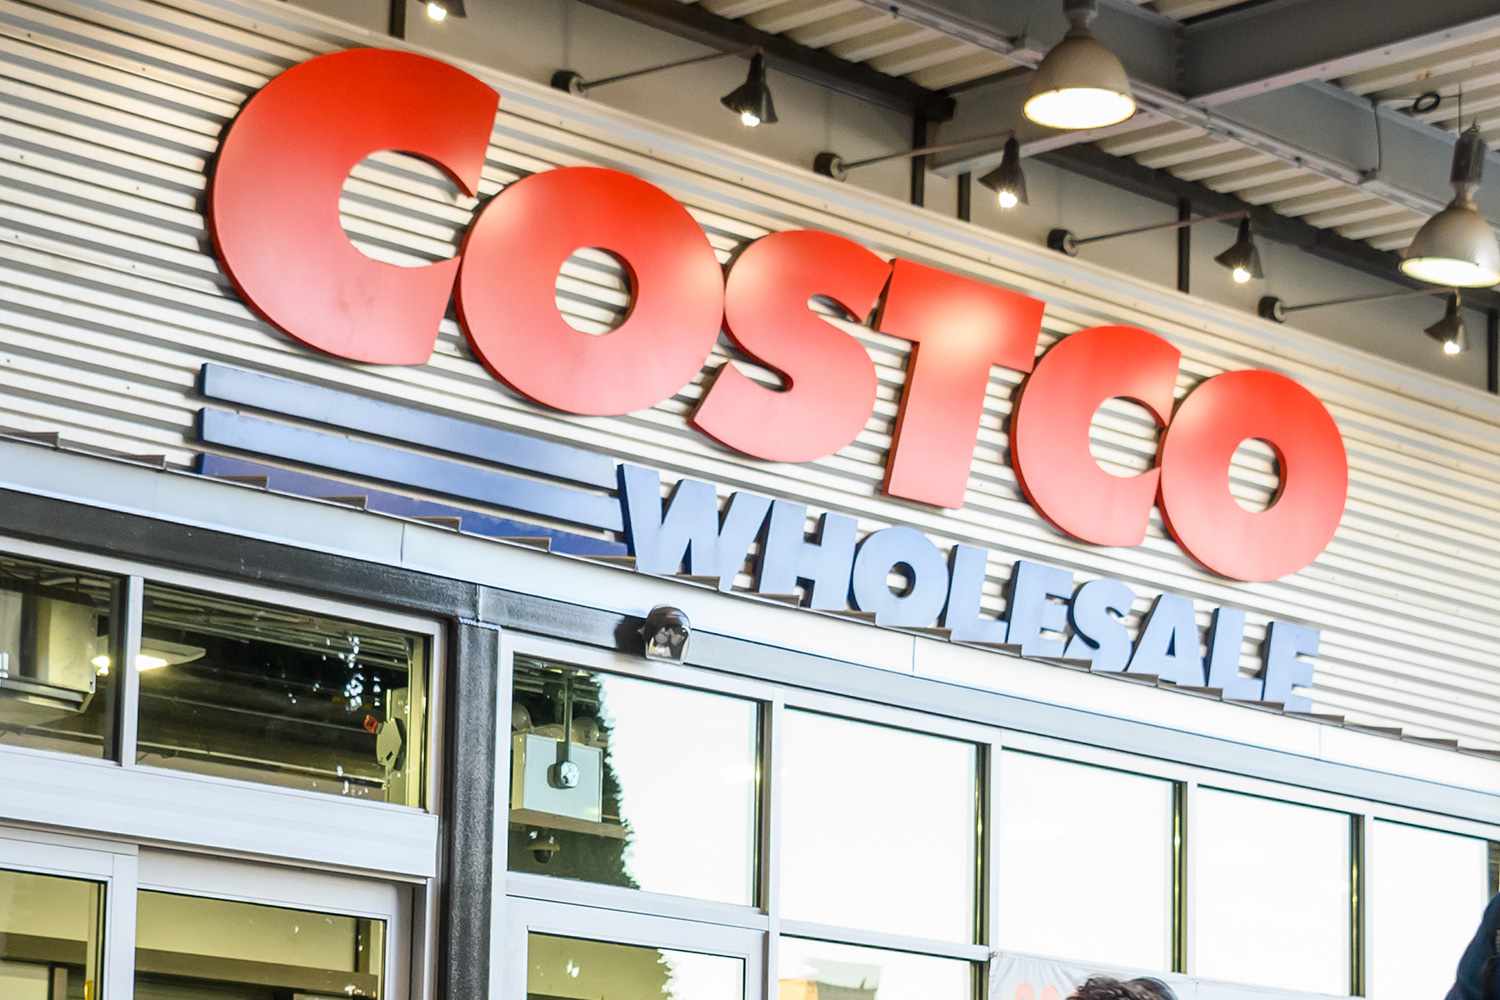 Costco Wholesale in East Harlem on November 24, 2020 뉴욕시에서